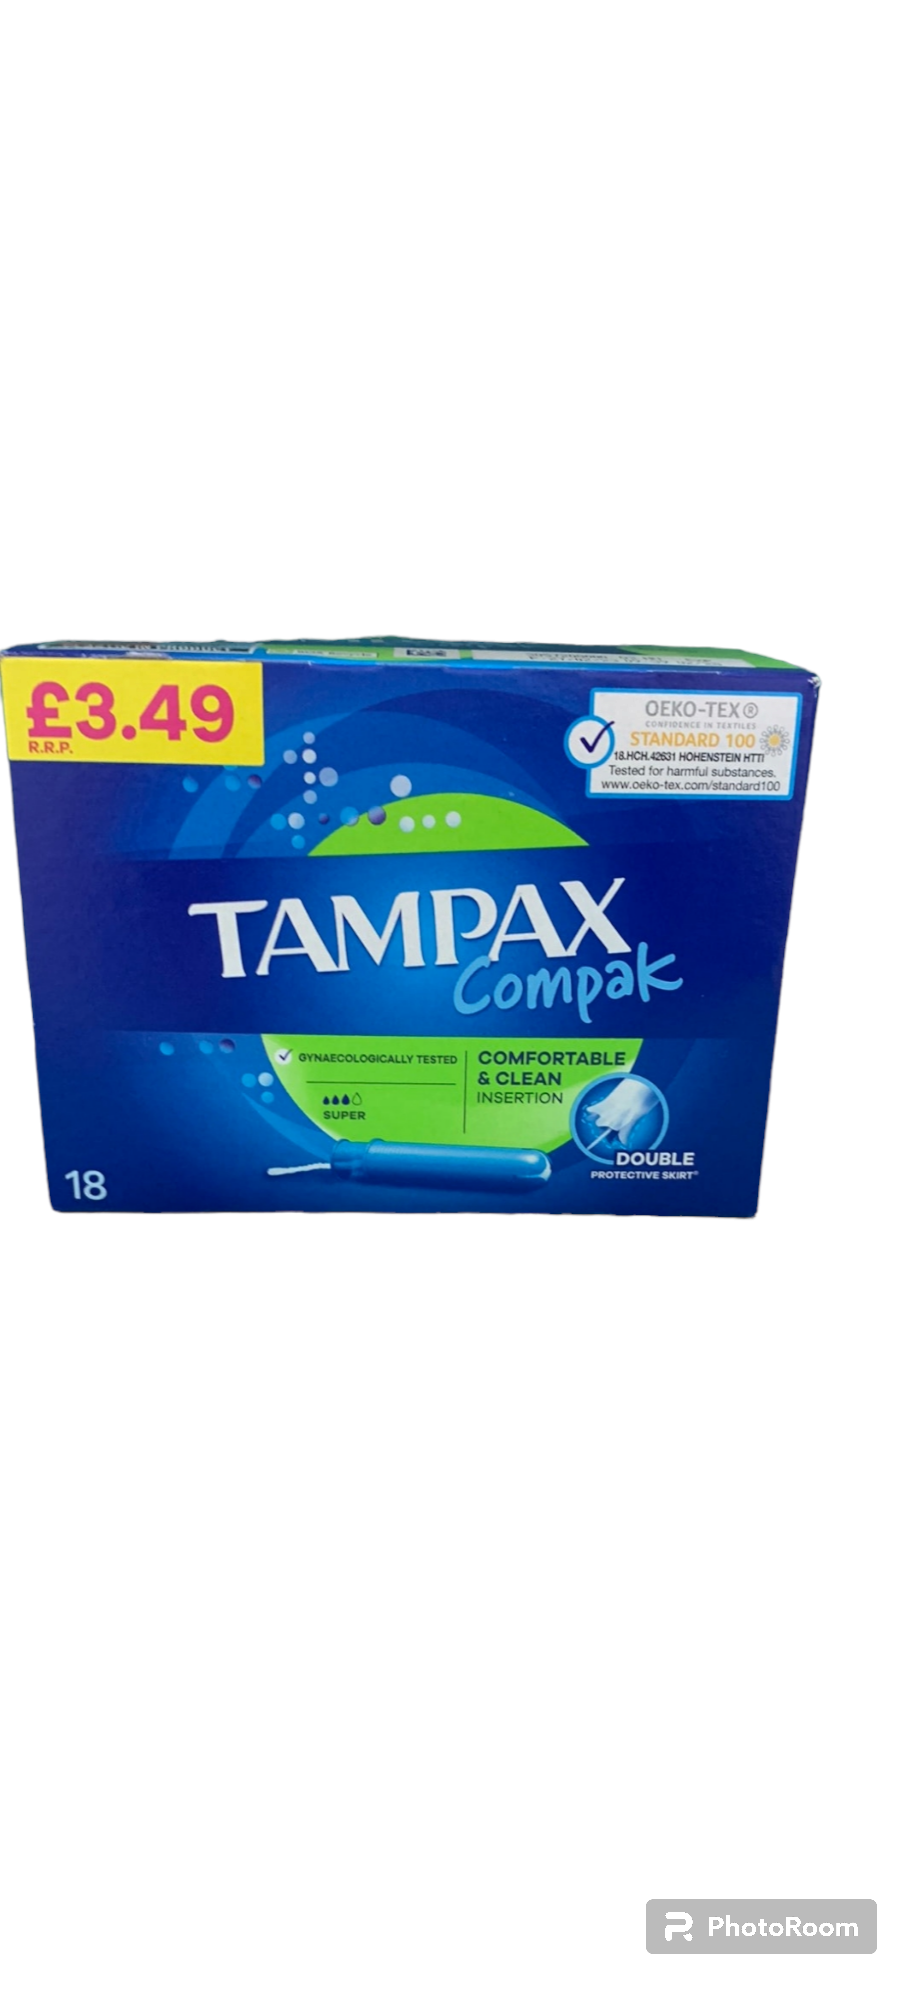 Tampax compak medium to heavy 18pk